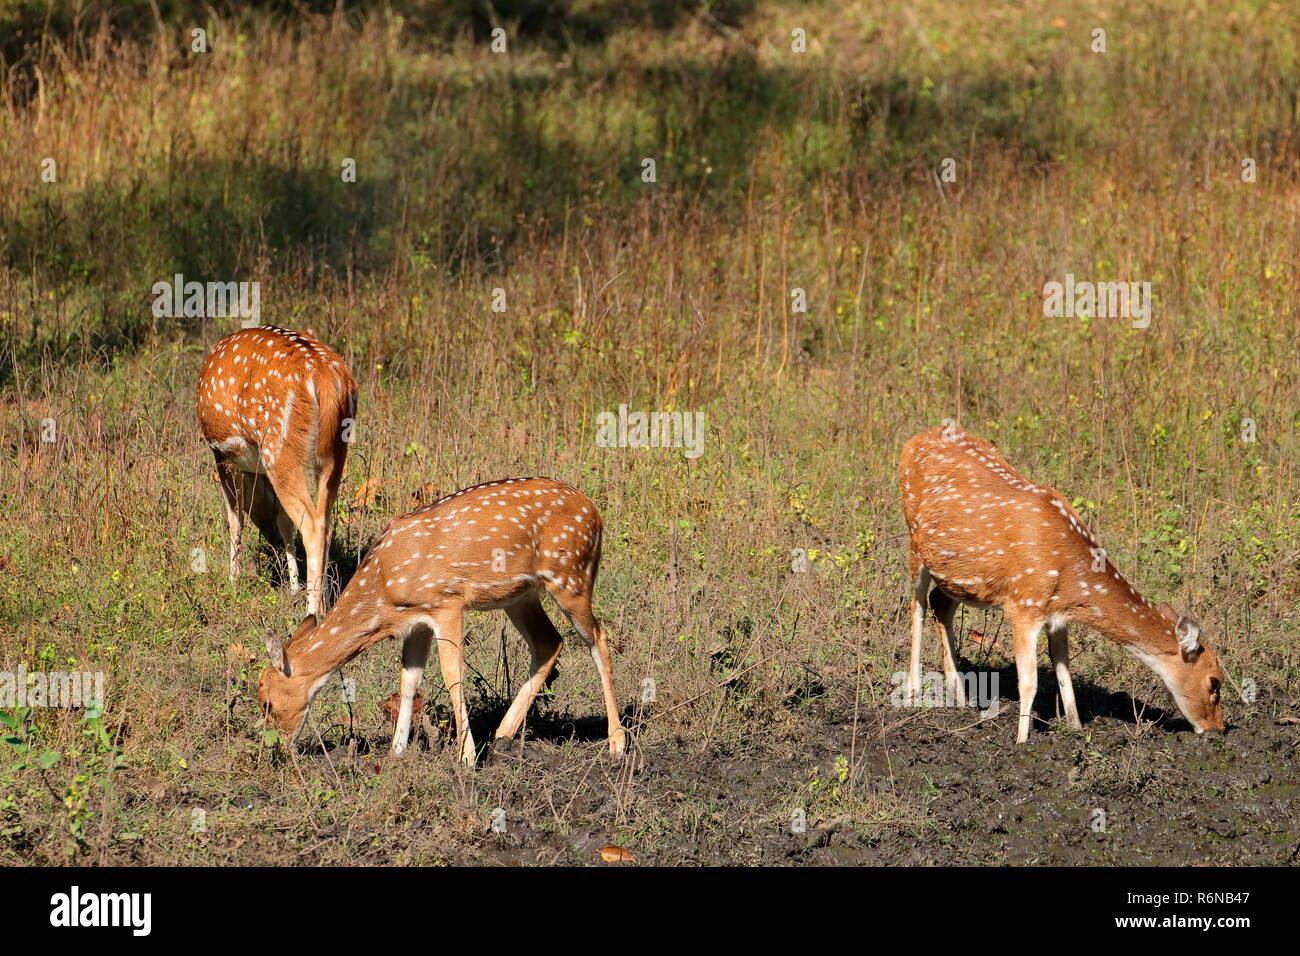 Spotted deer in natural habitat Stock Photo